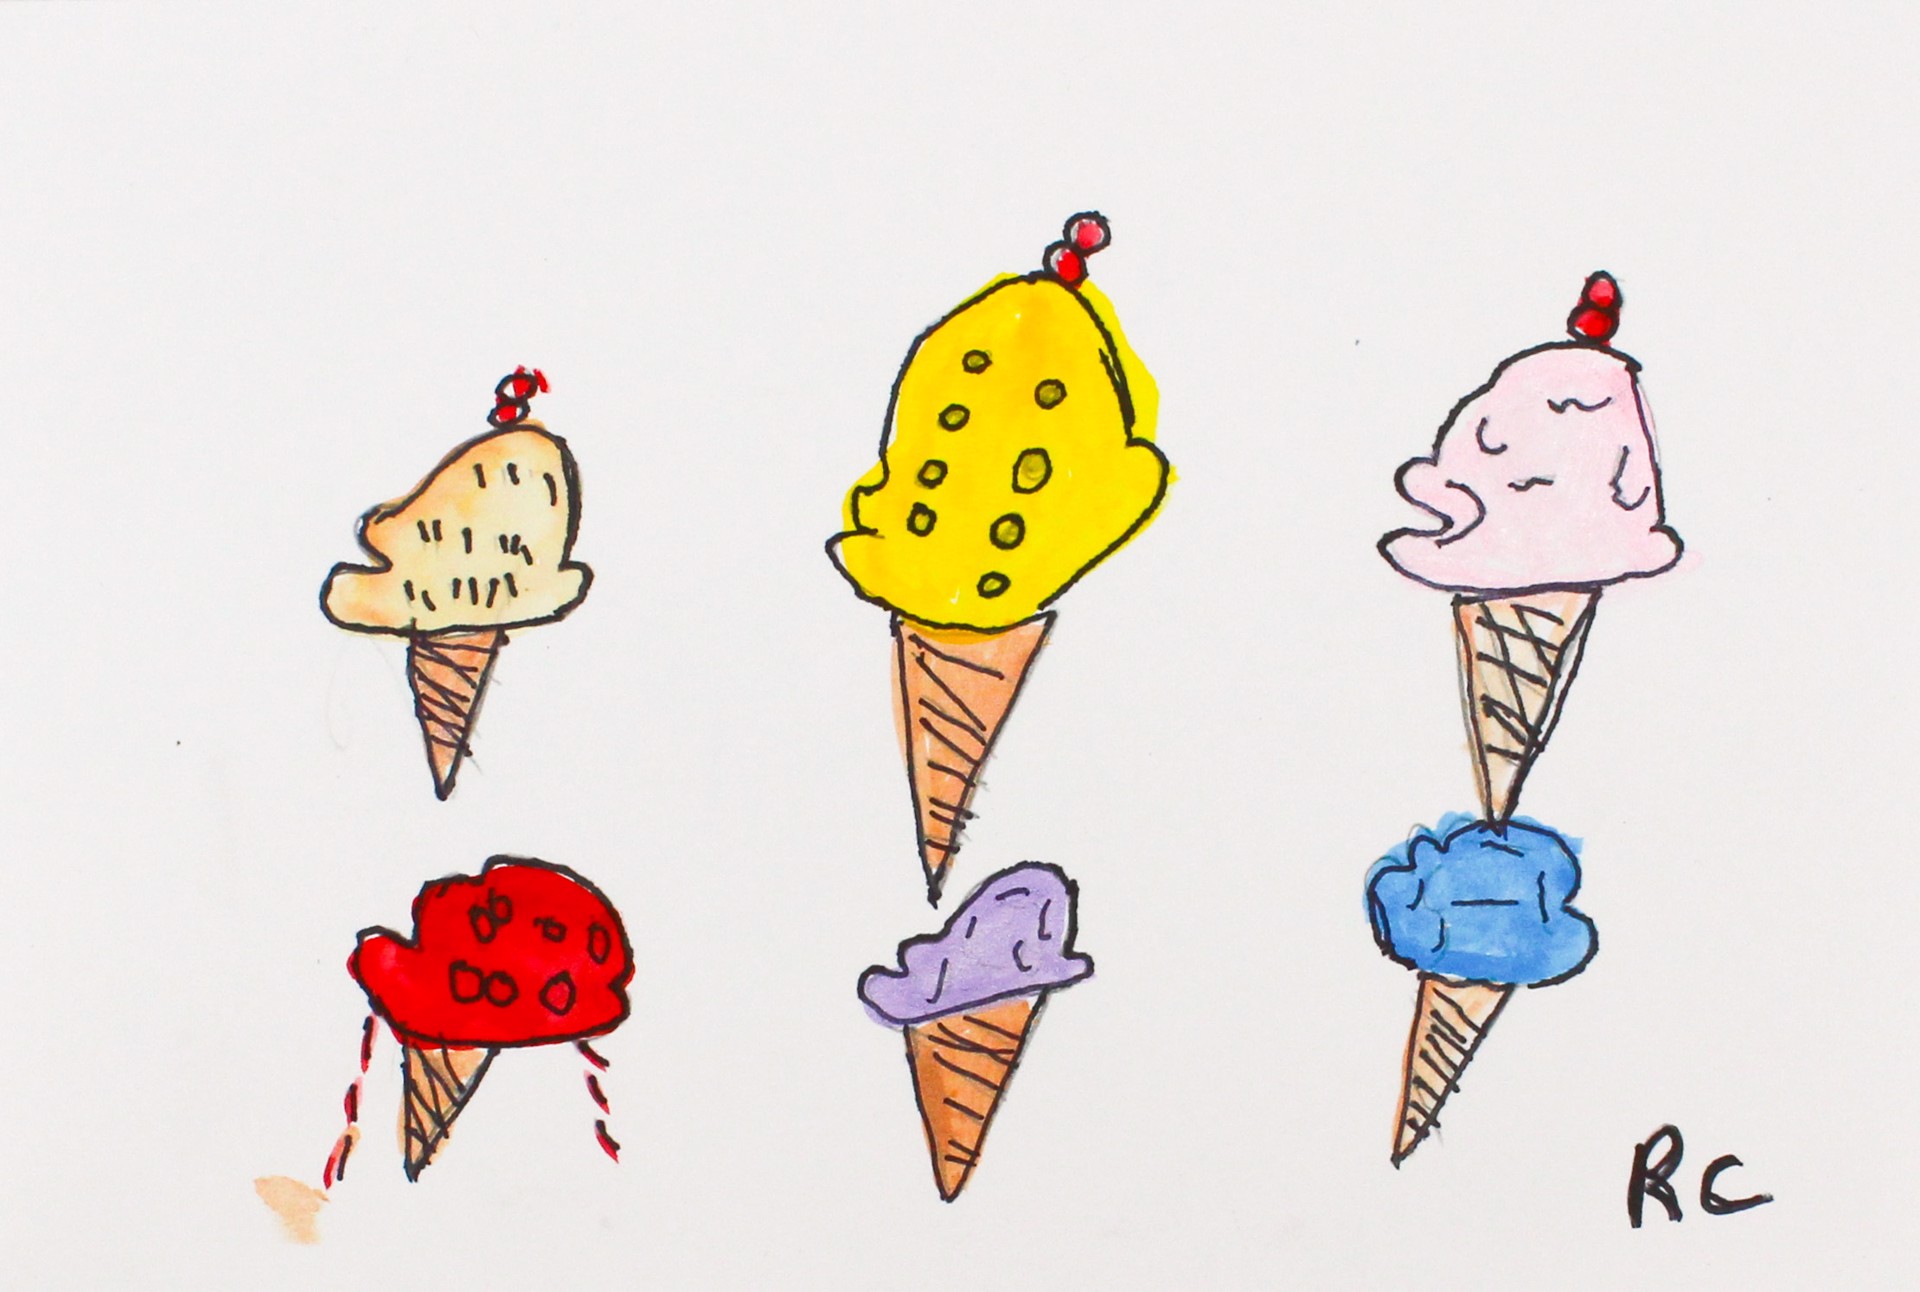 Ice Cream Cones 2 by Robert Corcoran